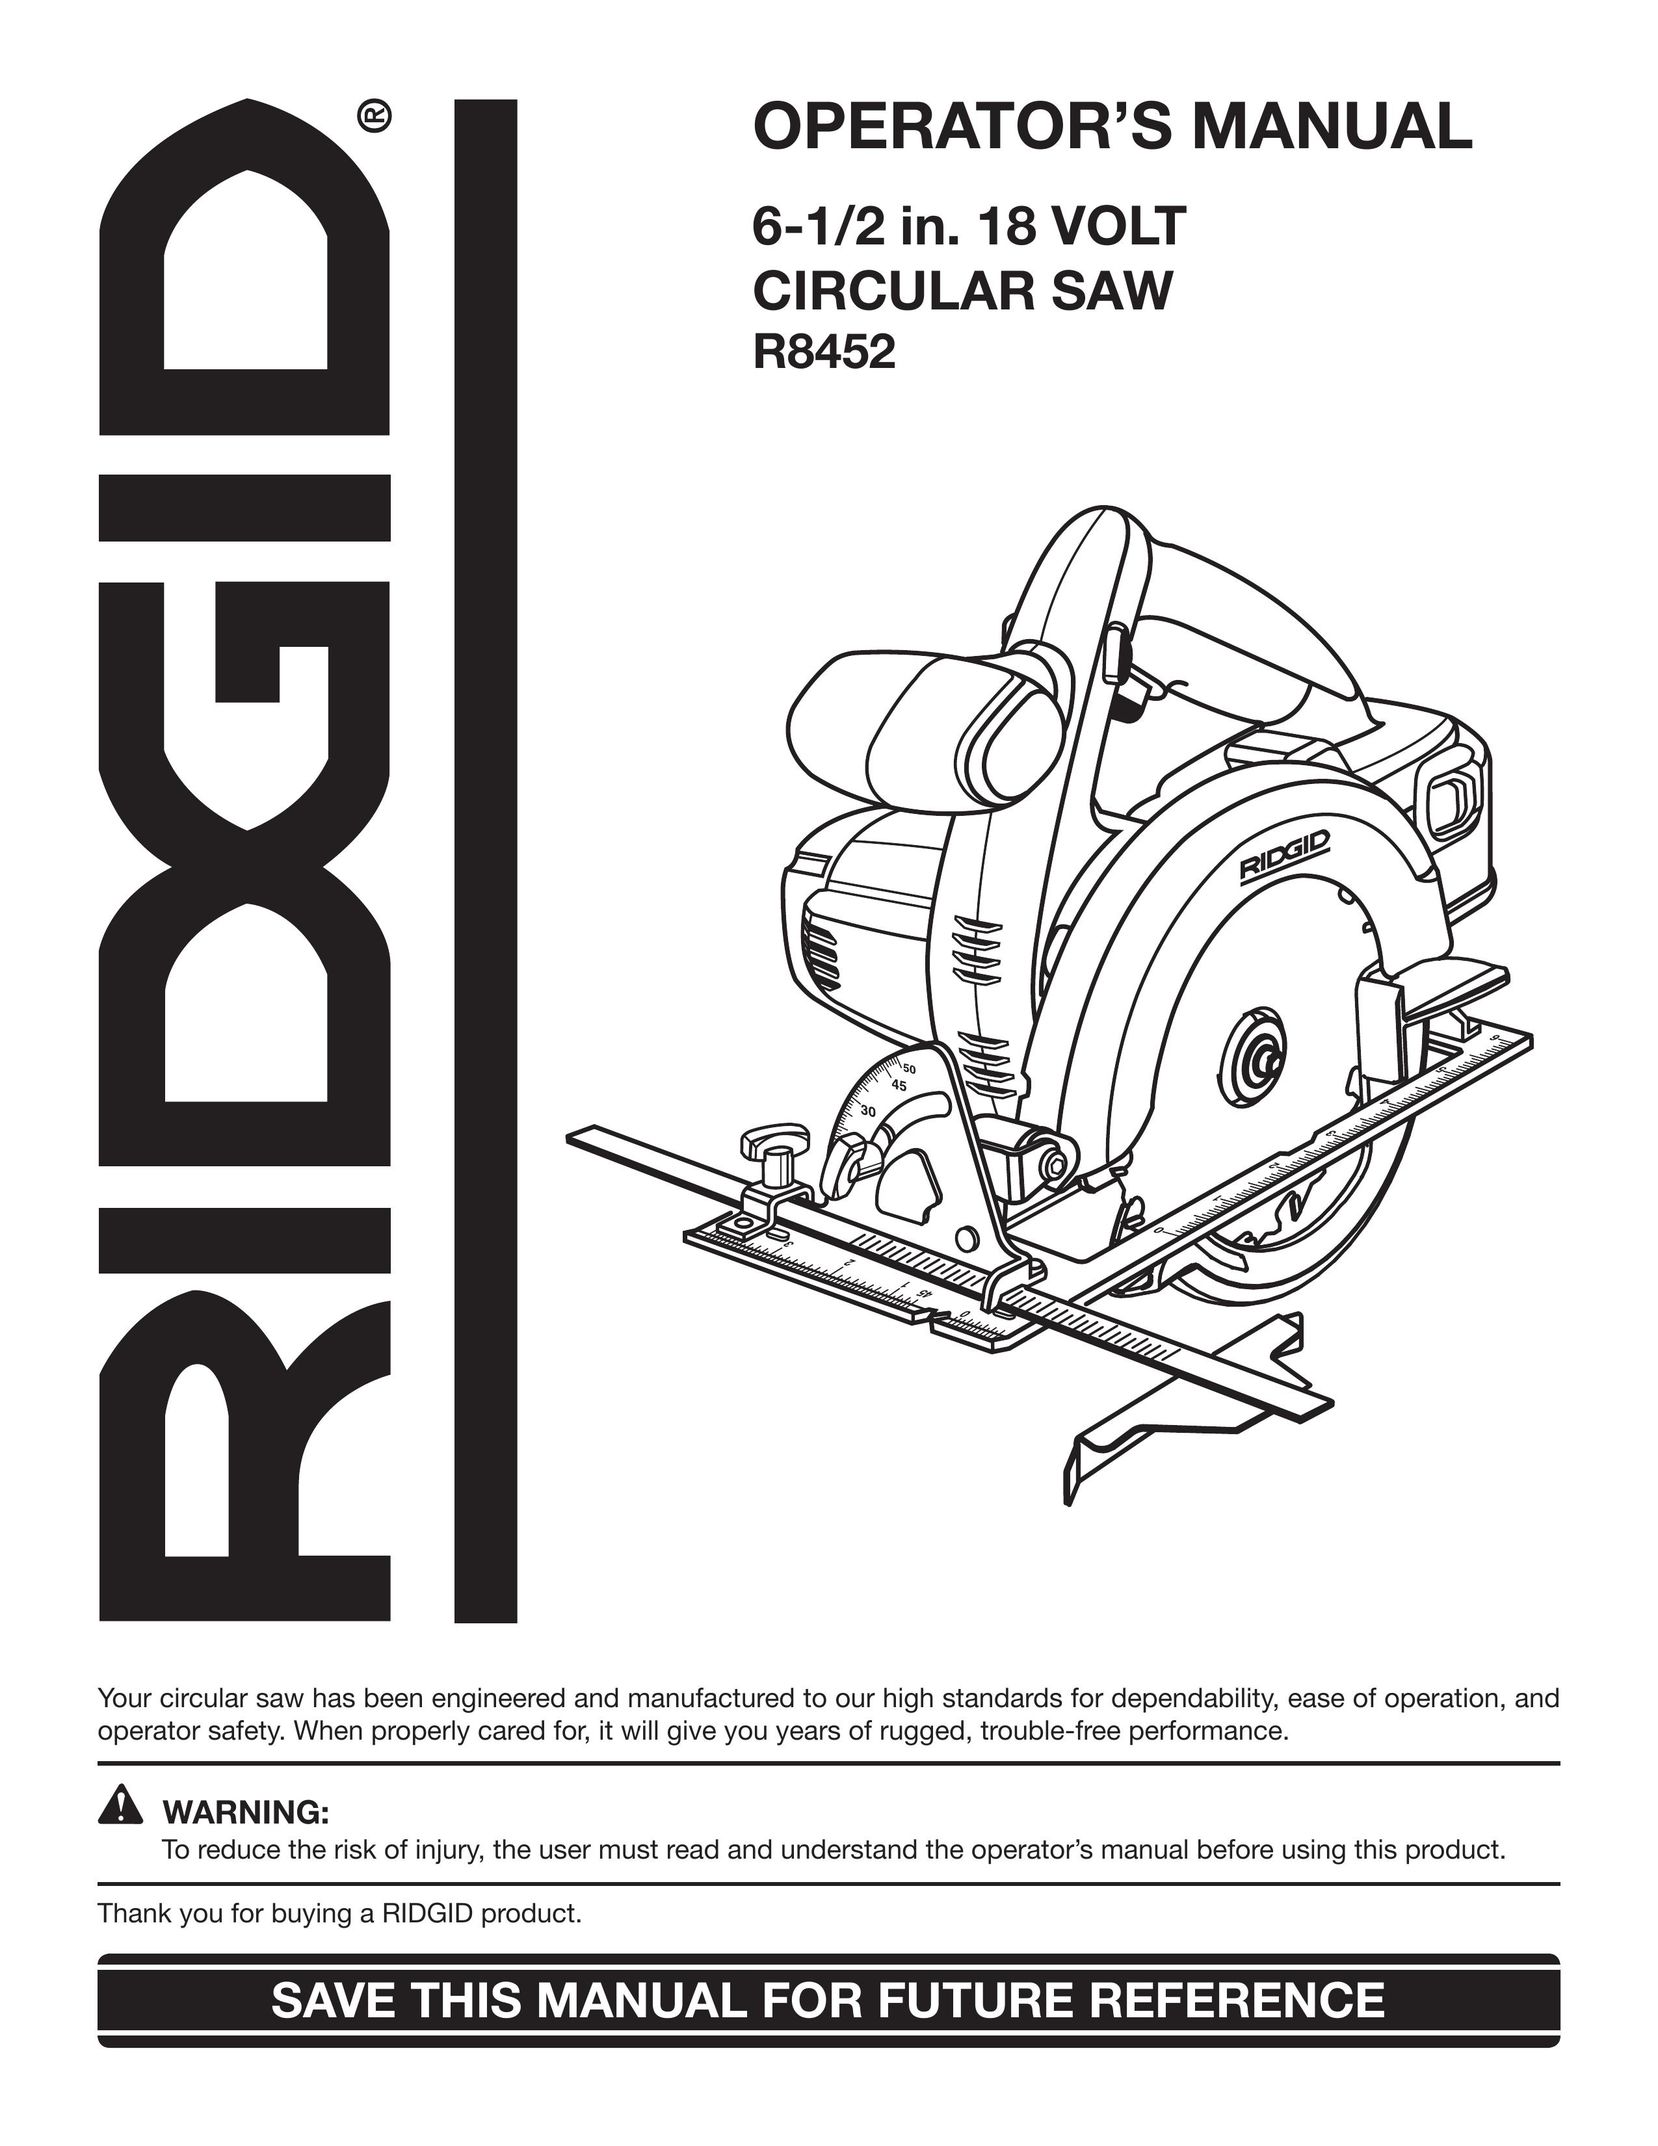 RIDGID R8452 Saw User Manual